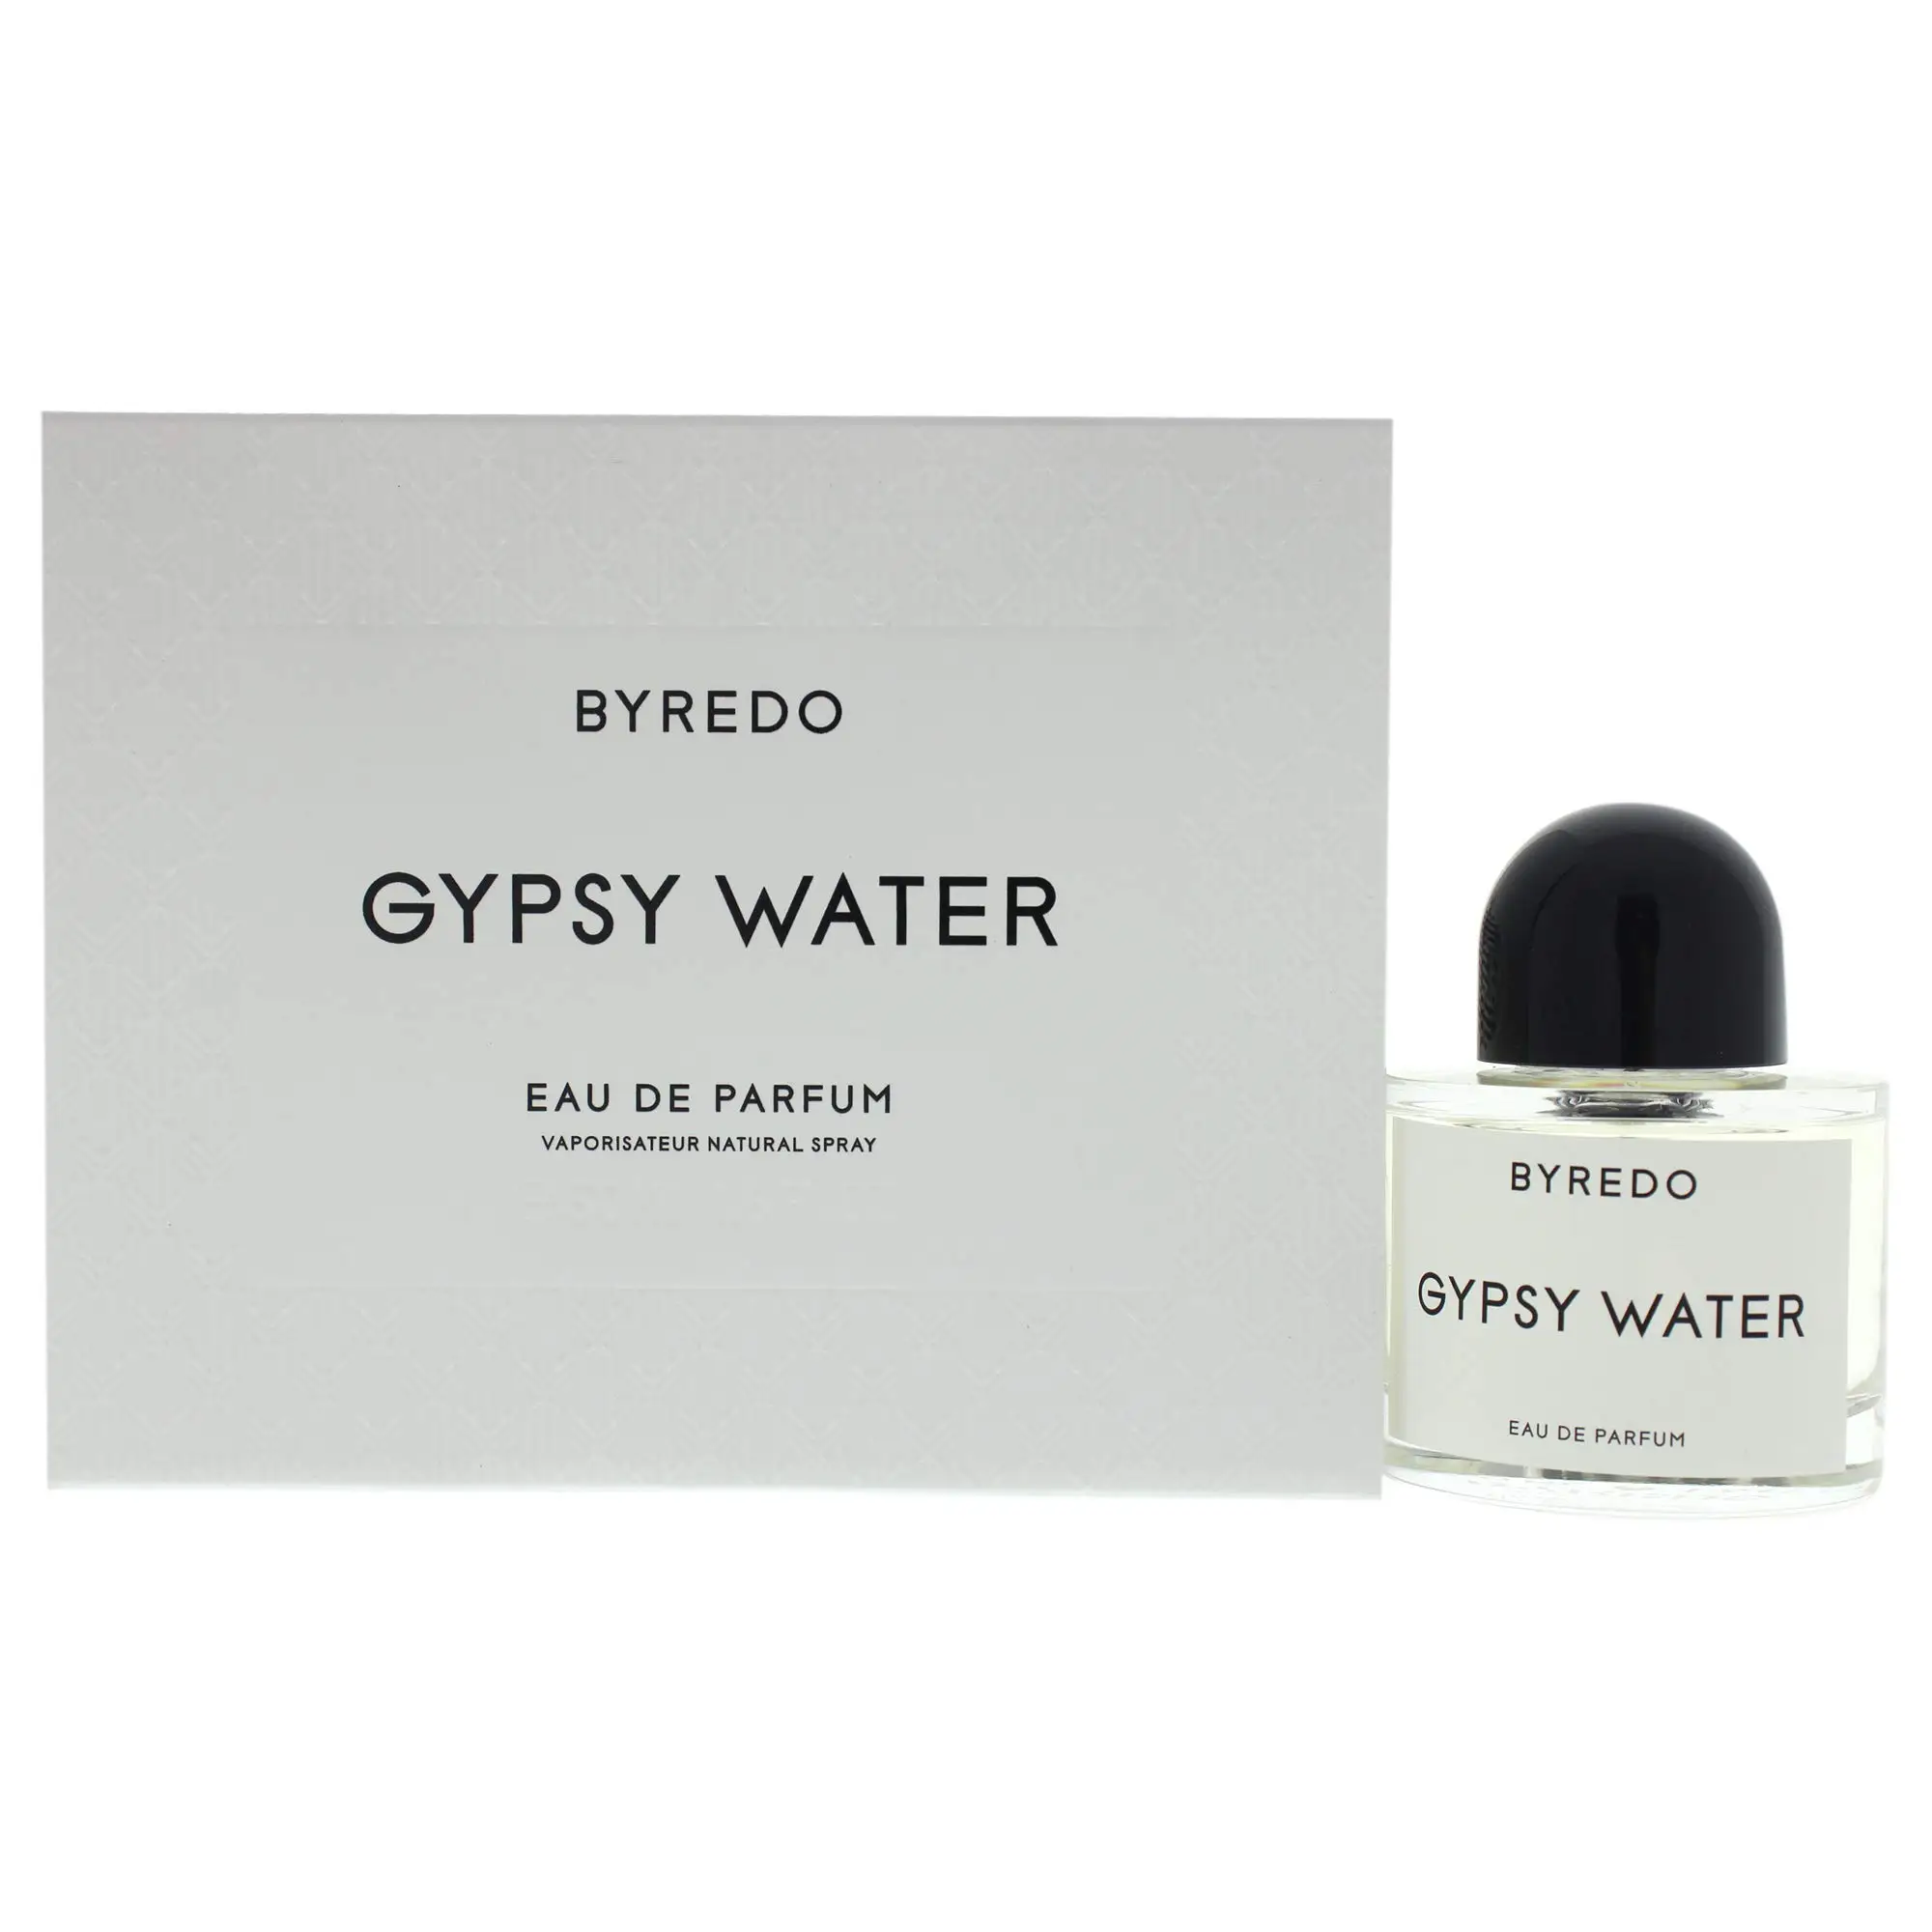 Байредо джипси ватер. Духи Byredo Gypsy Water. Byredo Gypsy Water Eau de Parfum. Byredo Gypsy Water 100мл духи. Парфюмерная вода Byredo Gypsy Water унисекс.